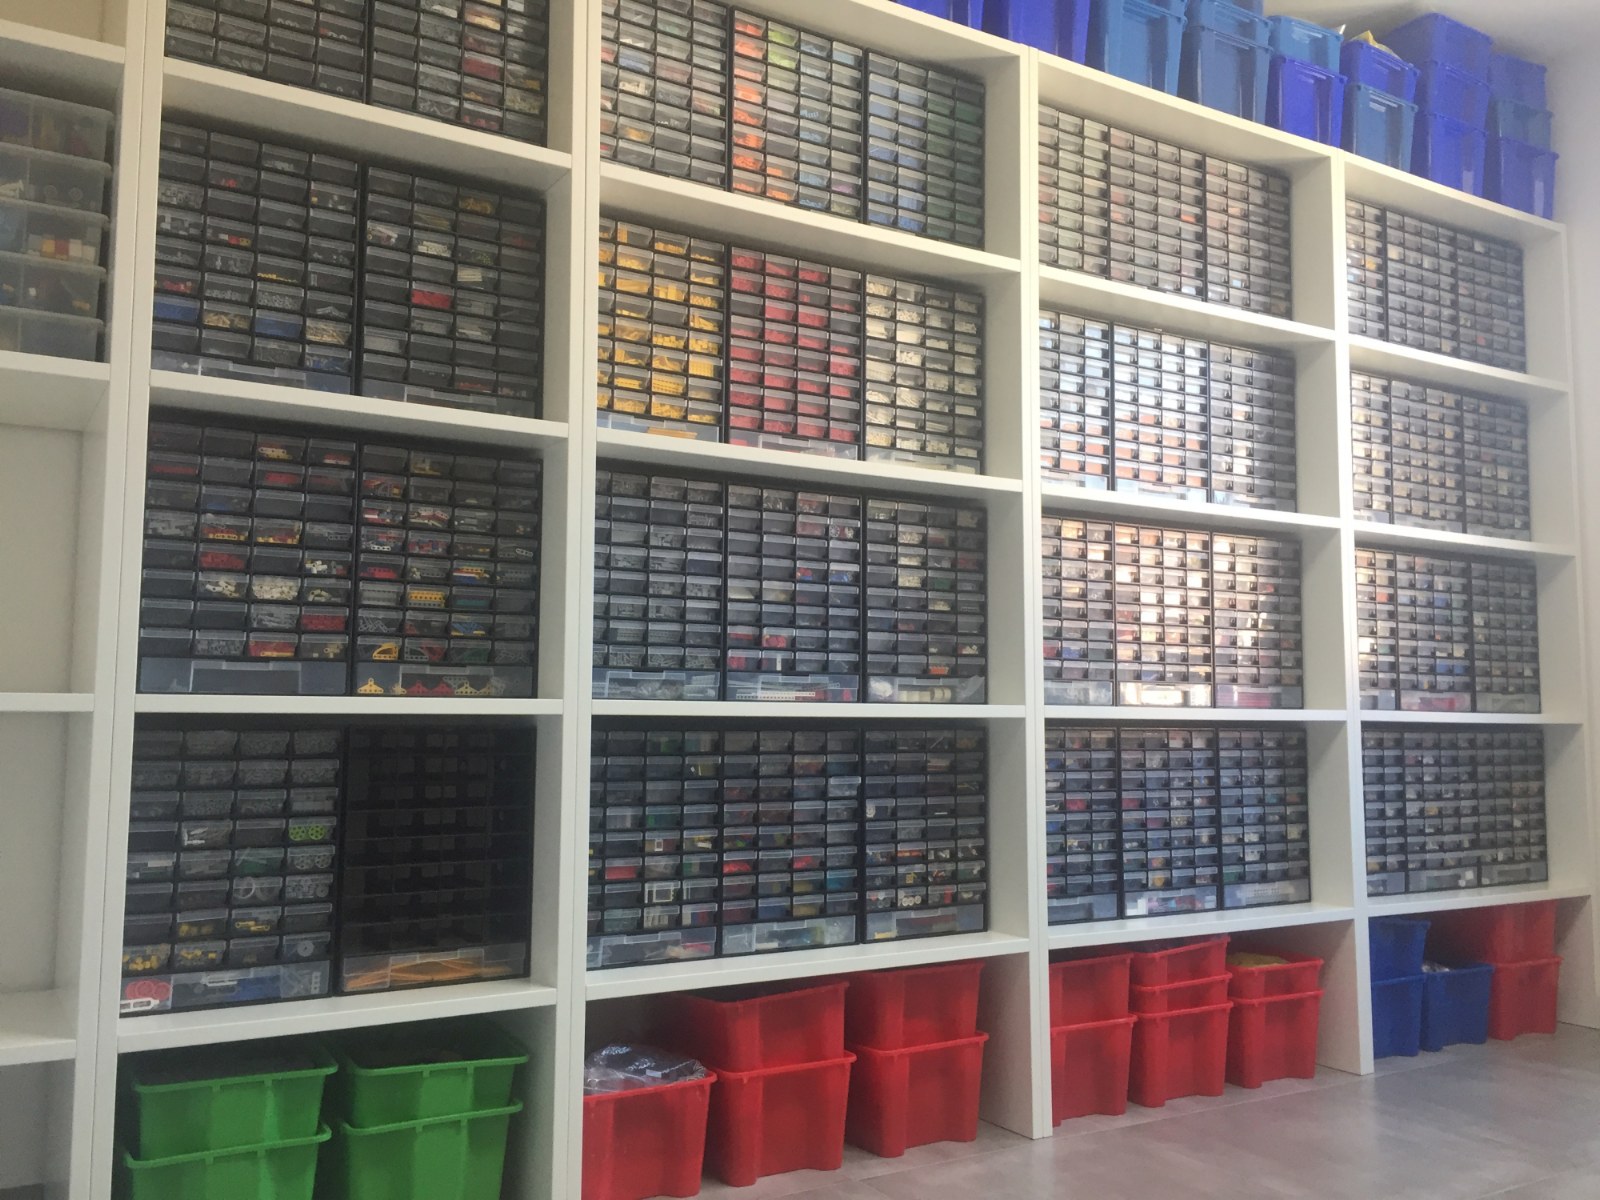 Identificere falanks afsked Storage solutions: HoMa | Brickset: LEGO set guide and database